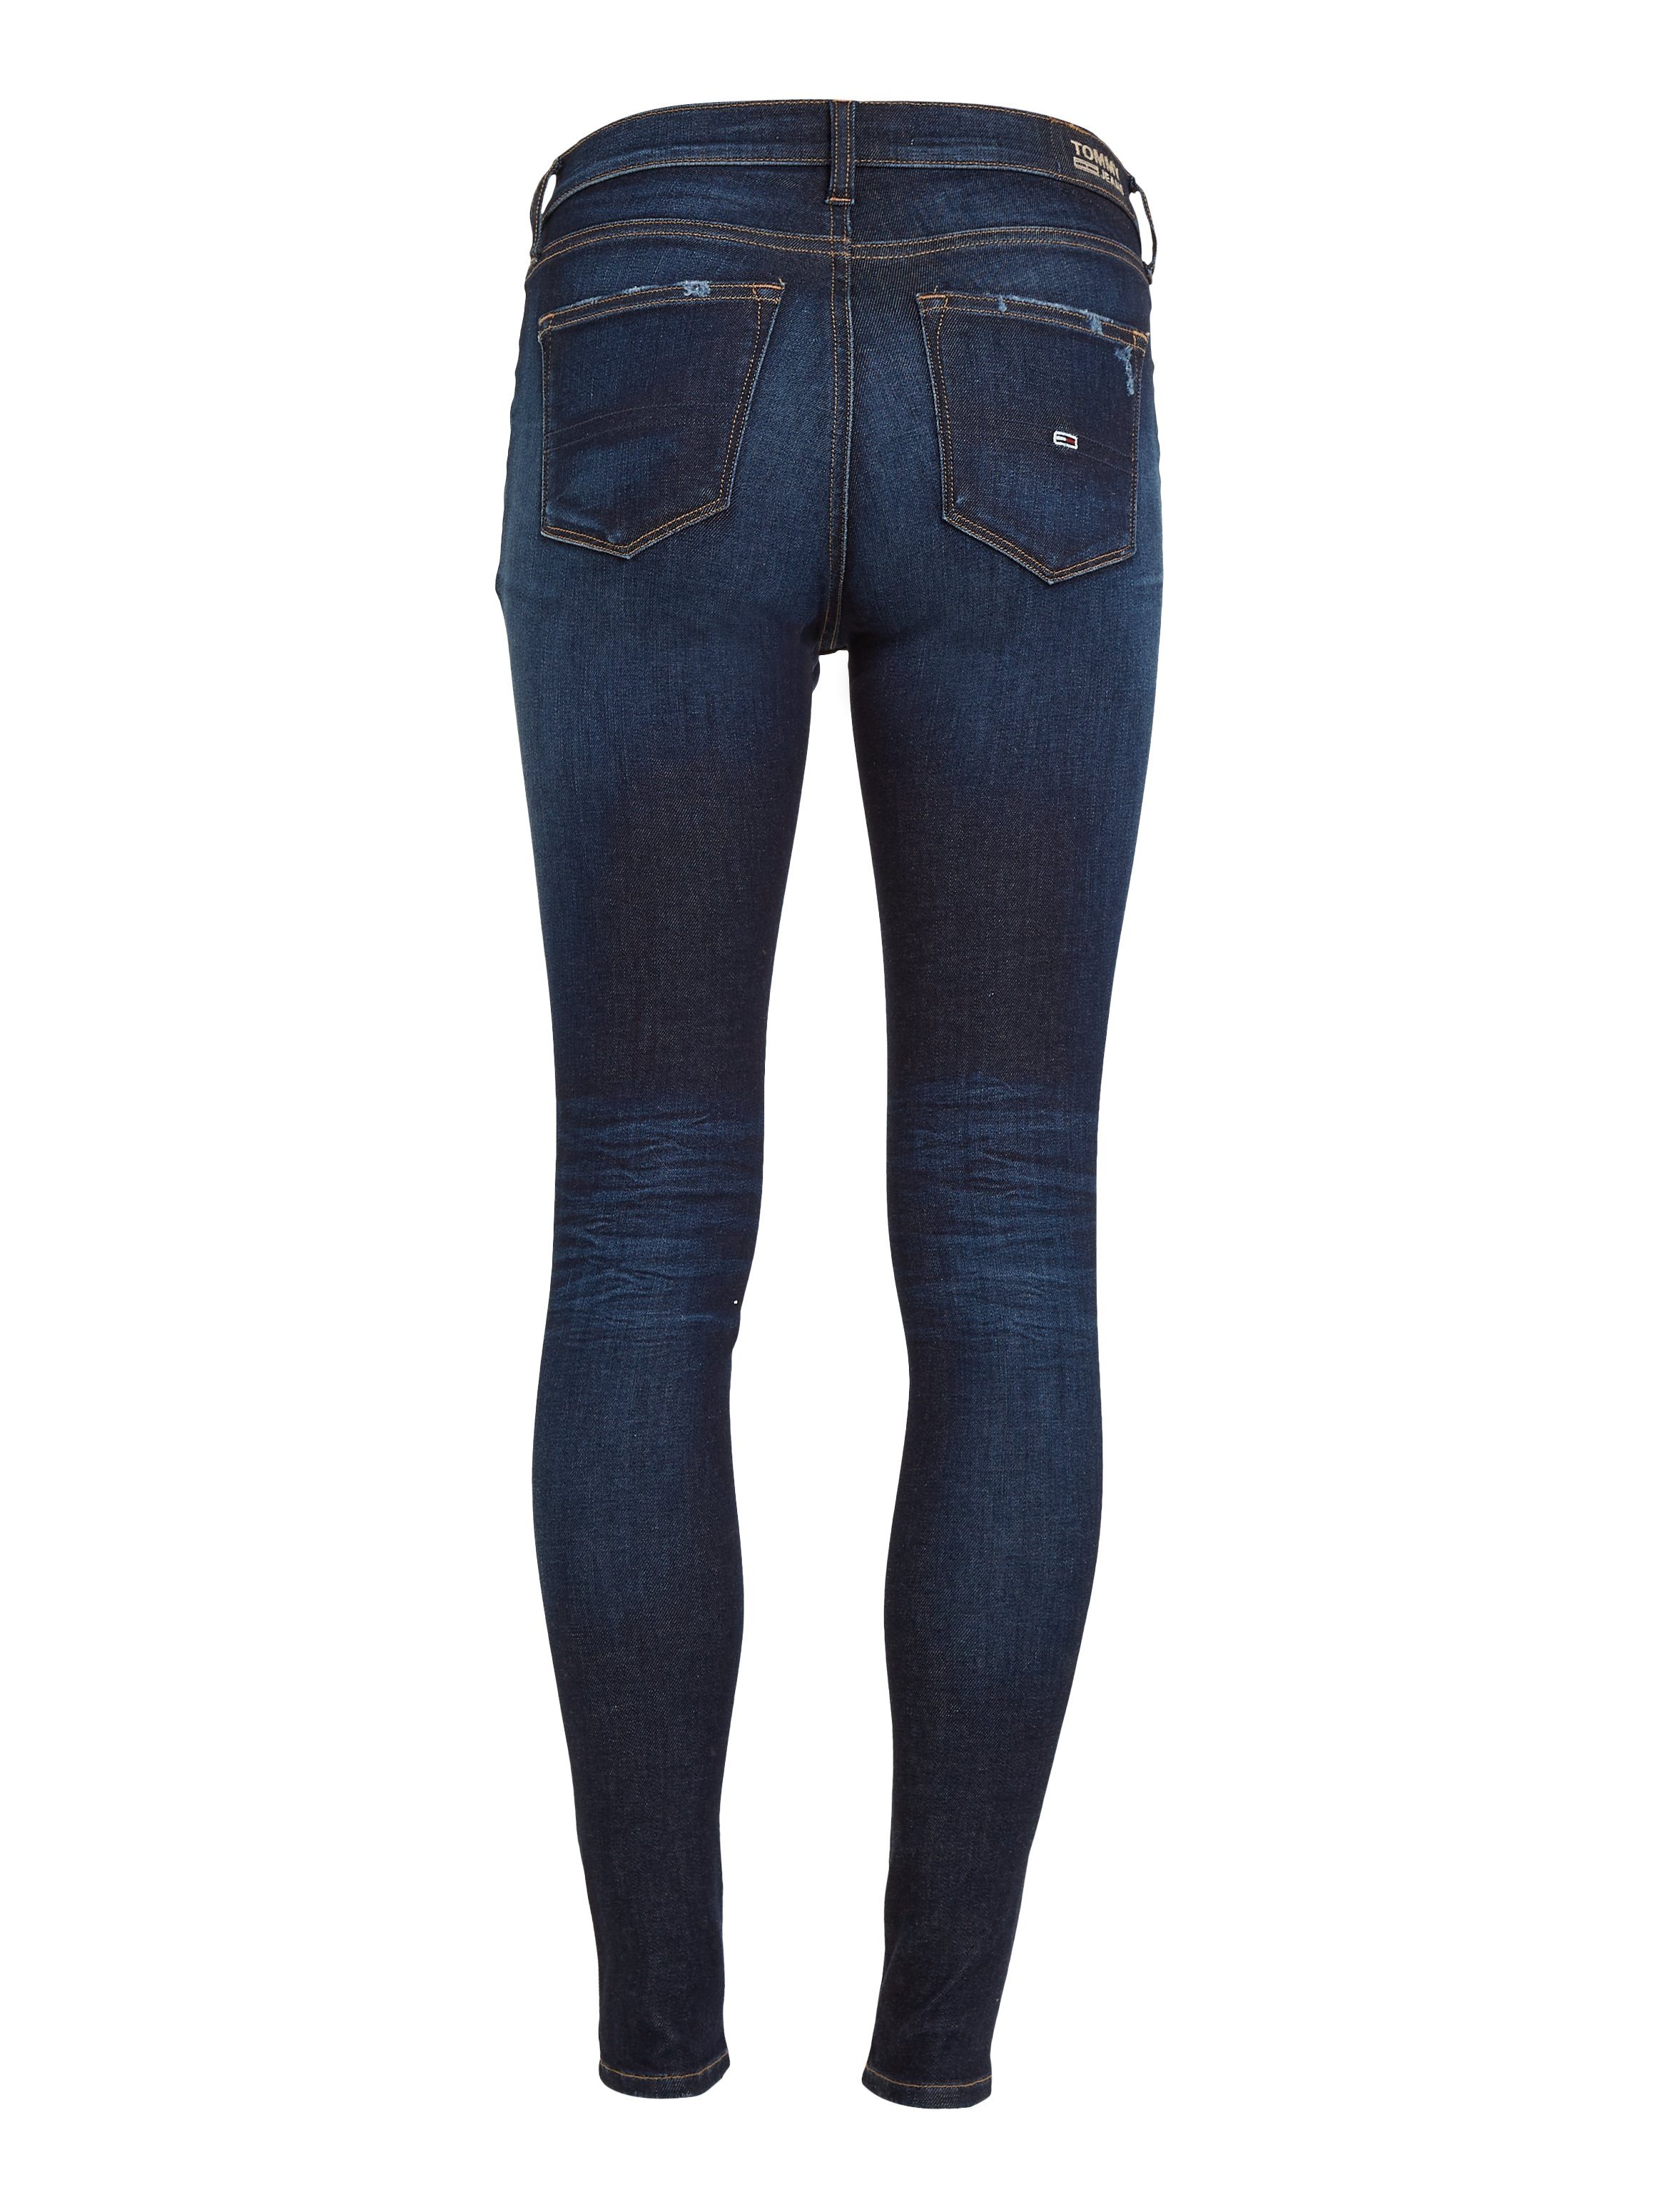 Tommy Jeans Skinny-fit-Jeans mit Tommy Denim_dark Markenlabel Jeans